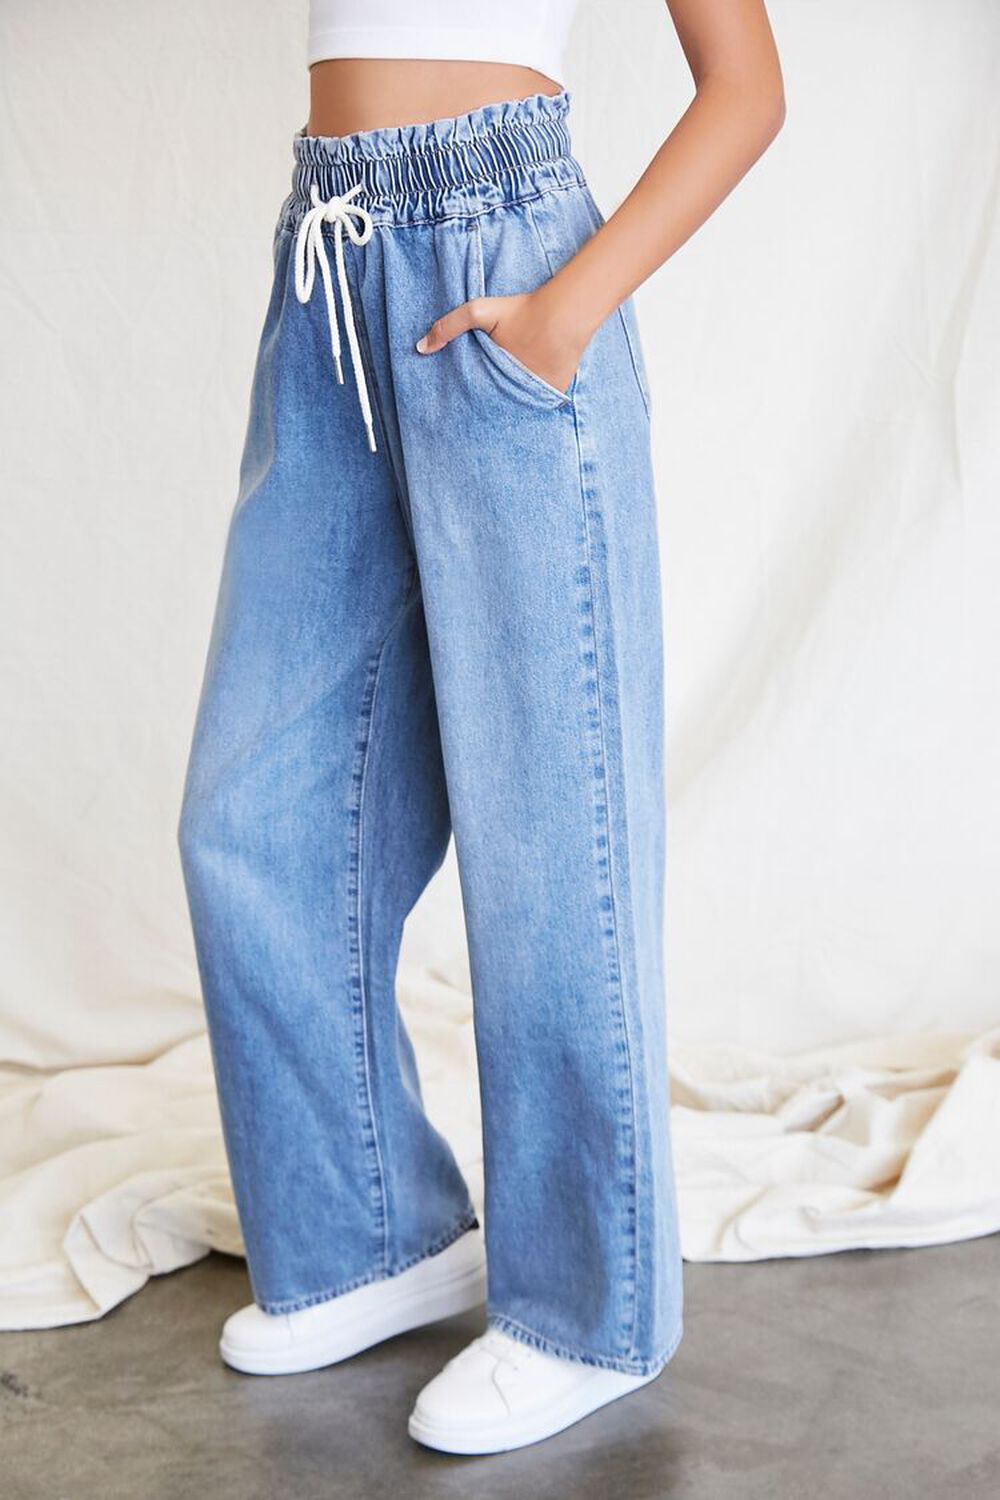 MEDIUM DENIM Paperbag High-Rise Jeans, image 3